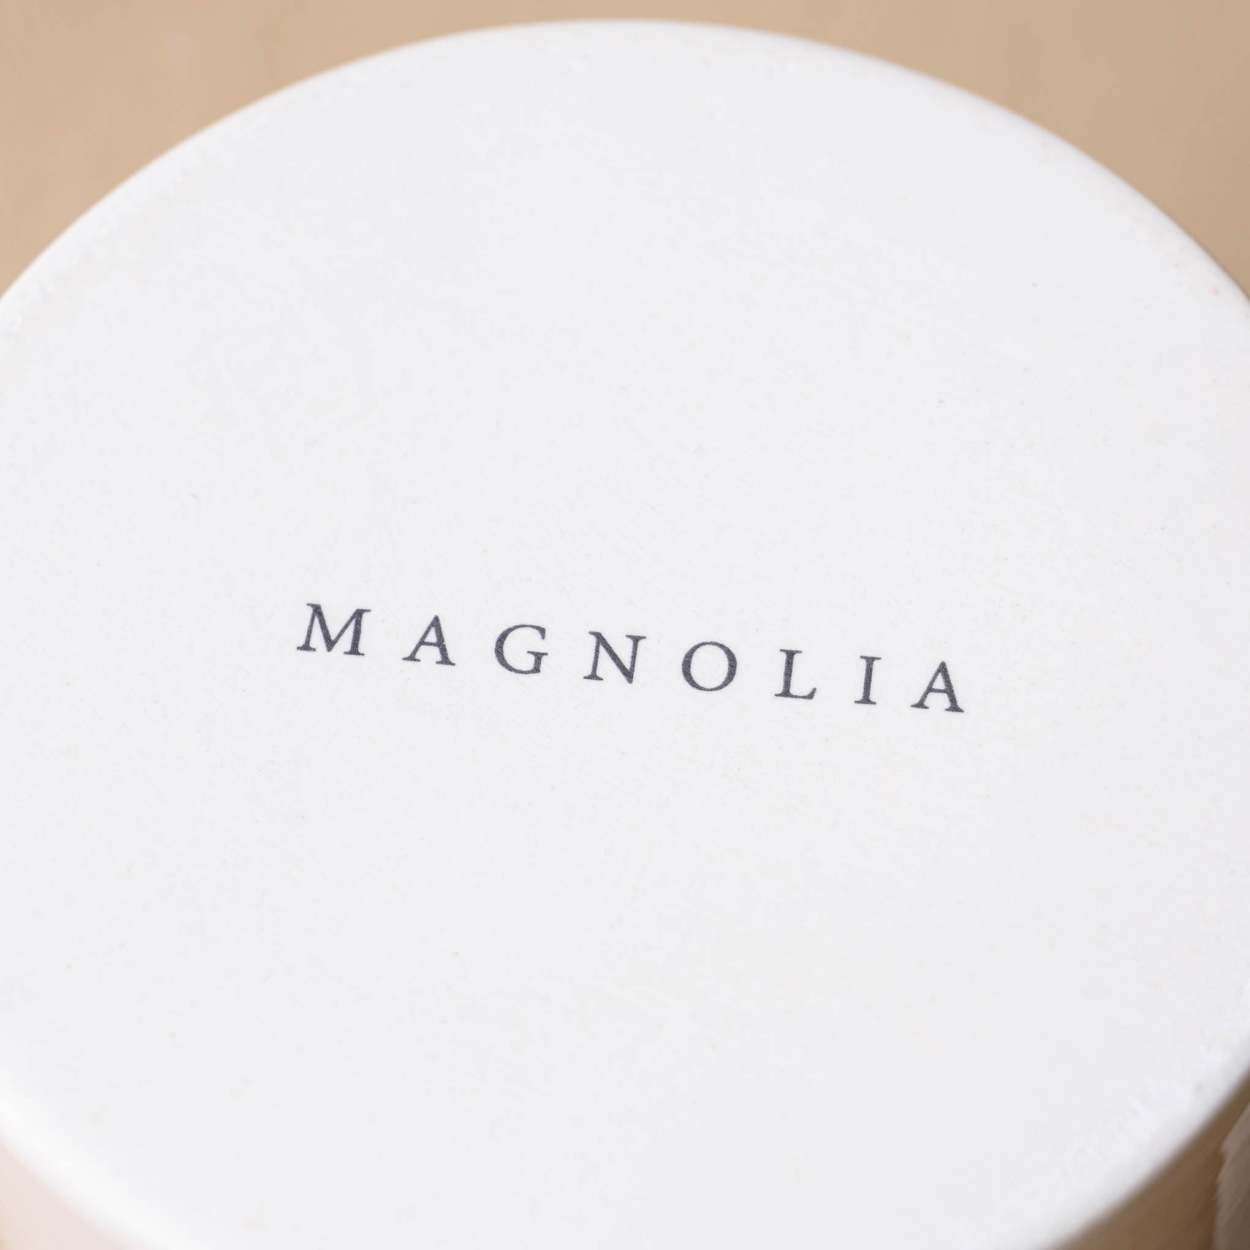 https://magnolia.com/images/res.cloudinary.com/social-upload-prod-media-cld/image/upload/w_1250/shopify/1/0207/8508/files/M01106017064_1.jpg?v=1689884041